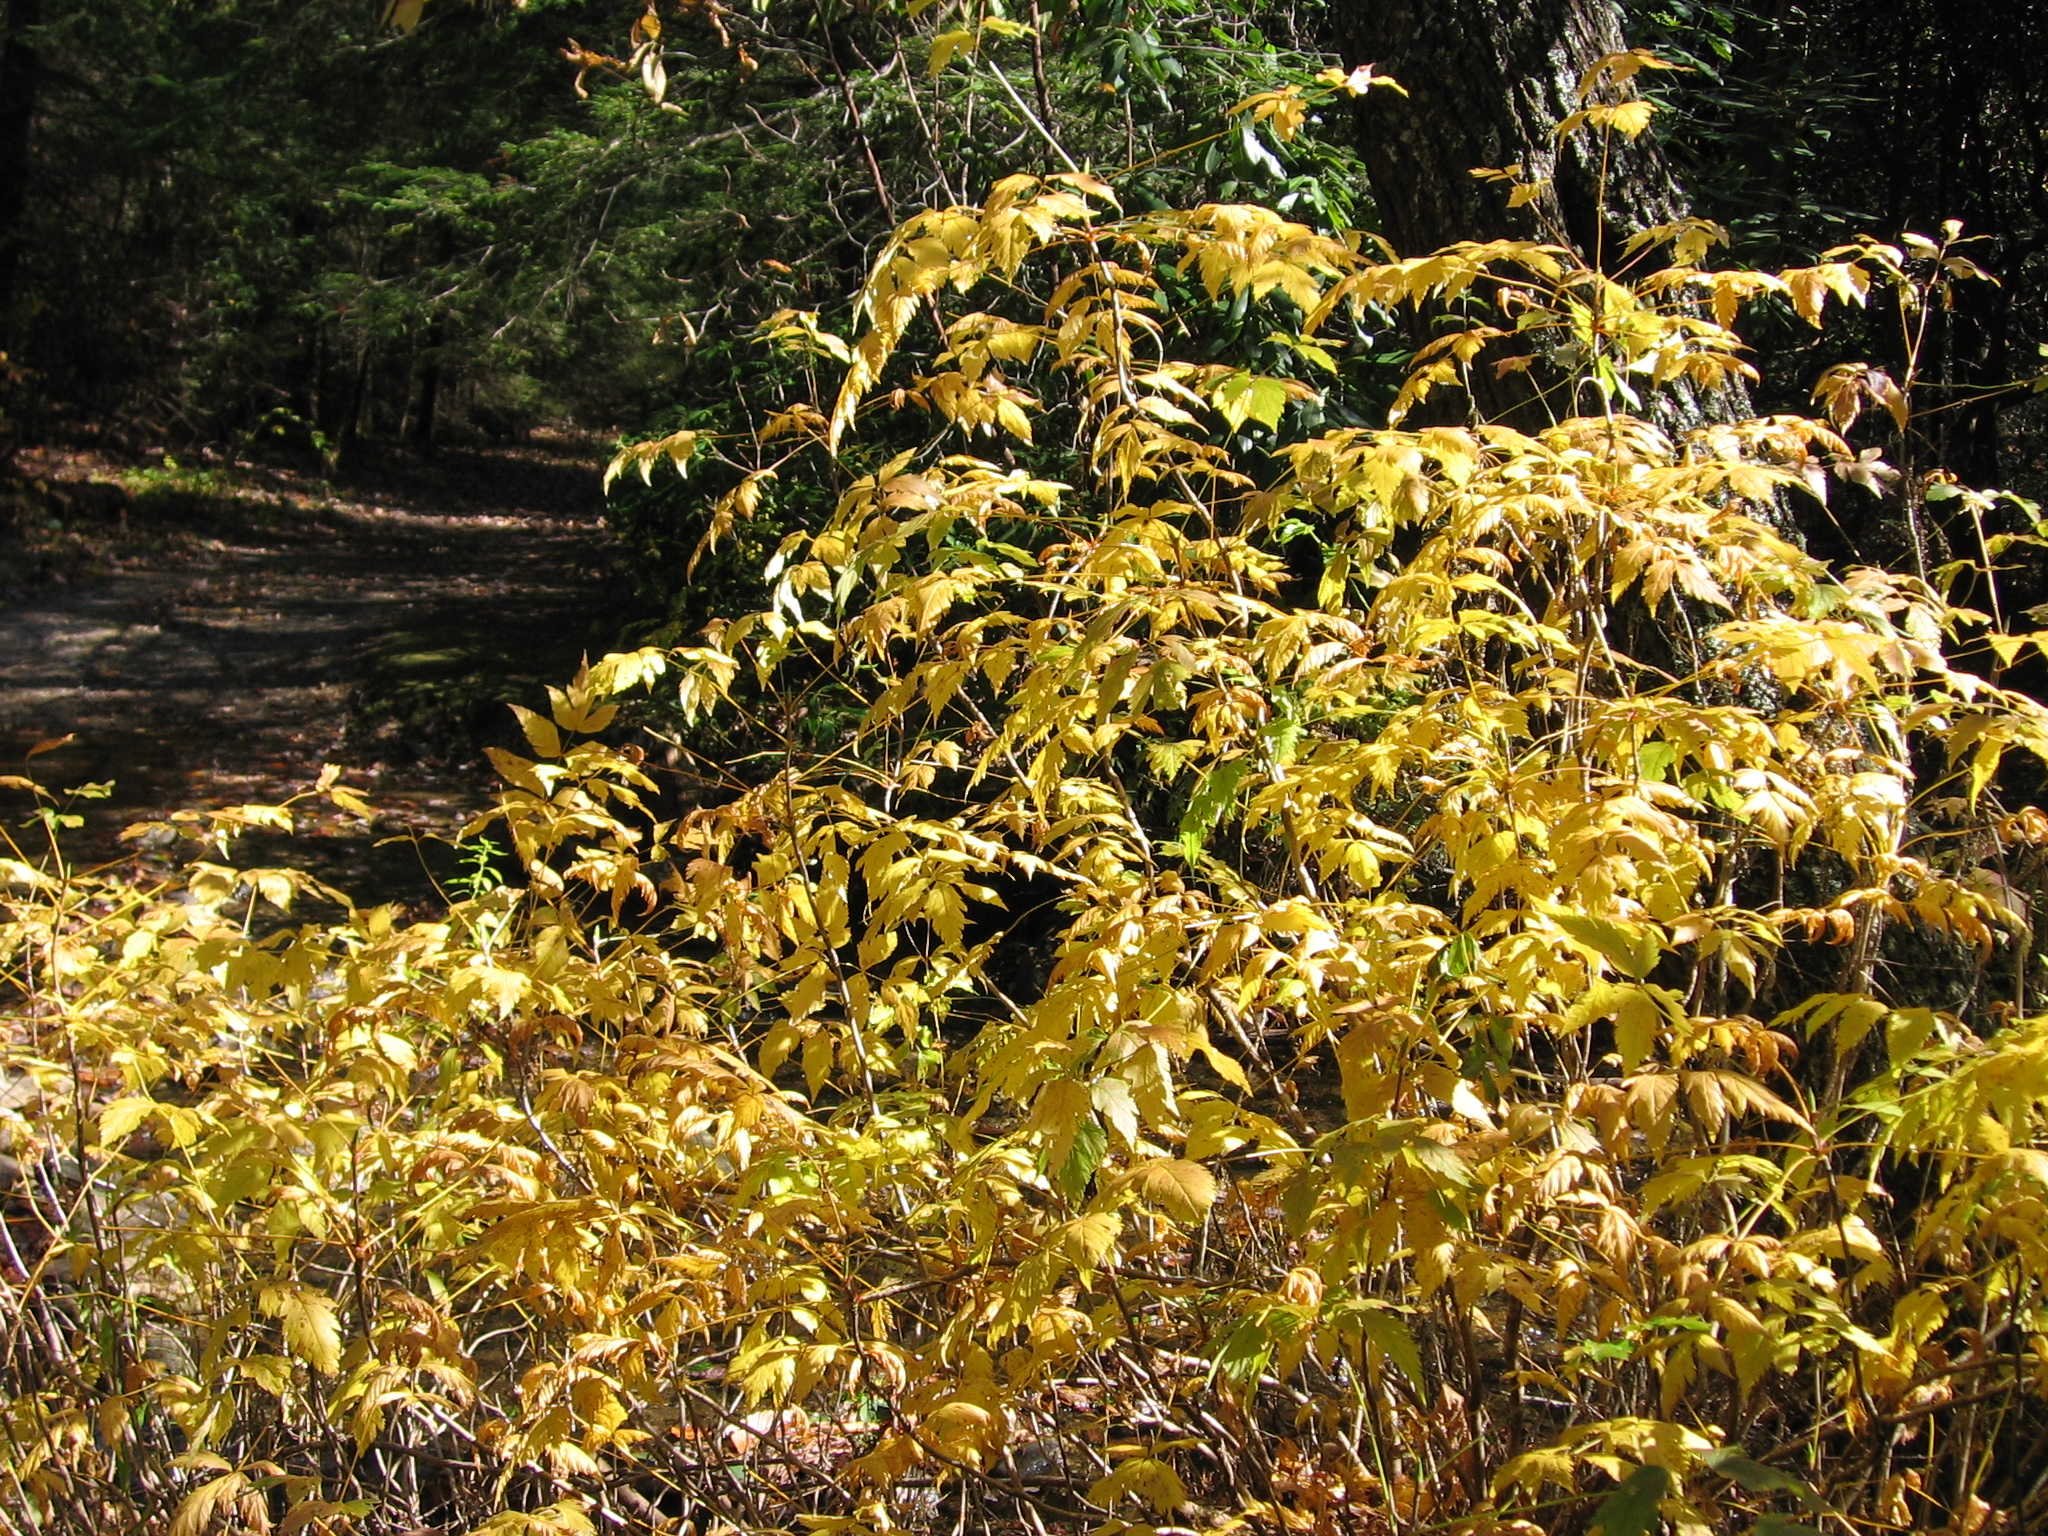 Yellowroot fall color pic